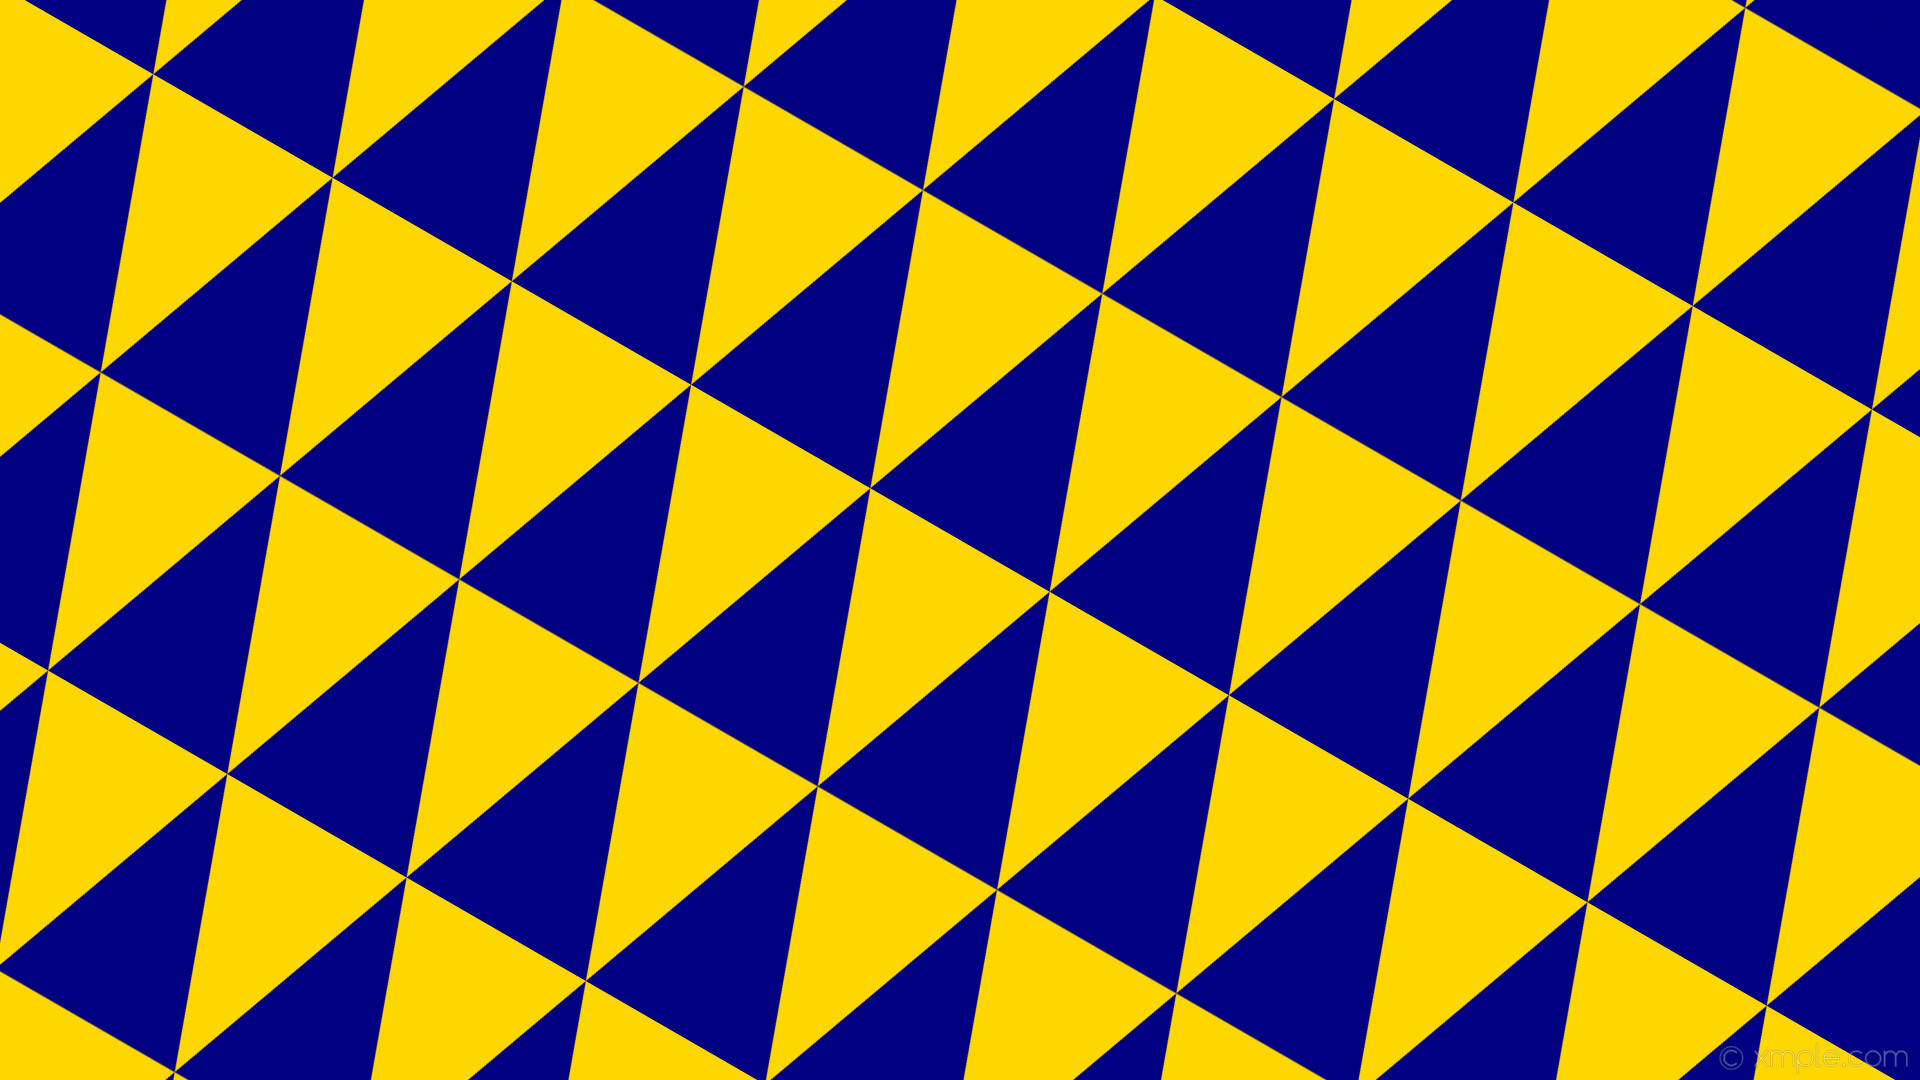 1920x1080 wallpaper blue yellow triangle gold navy #ffd700 #000080 330Â° 207px 569px